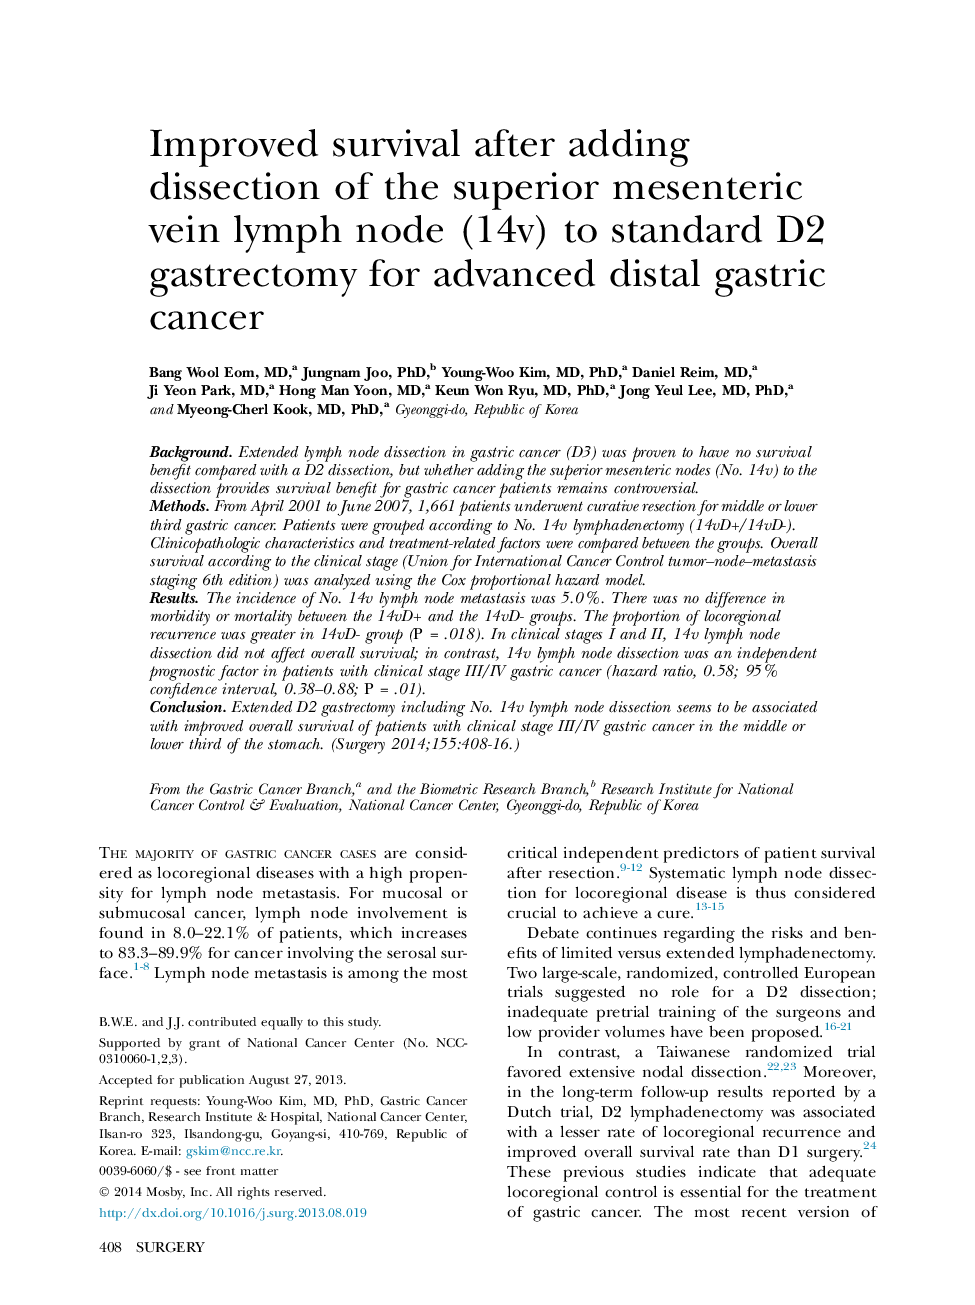 Original CommunicationImproved survival after adding dissection of the superior mesenteric vein lymph node (14v) to standard D2 gastrectomy for advanced distal gastric cancer